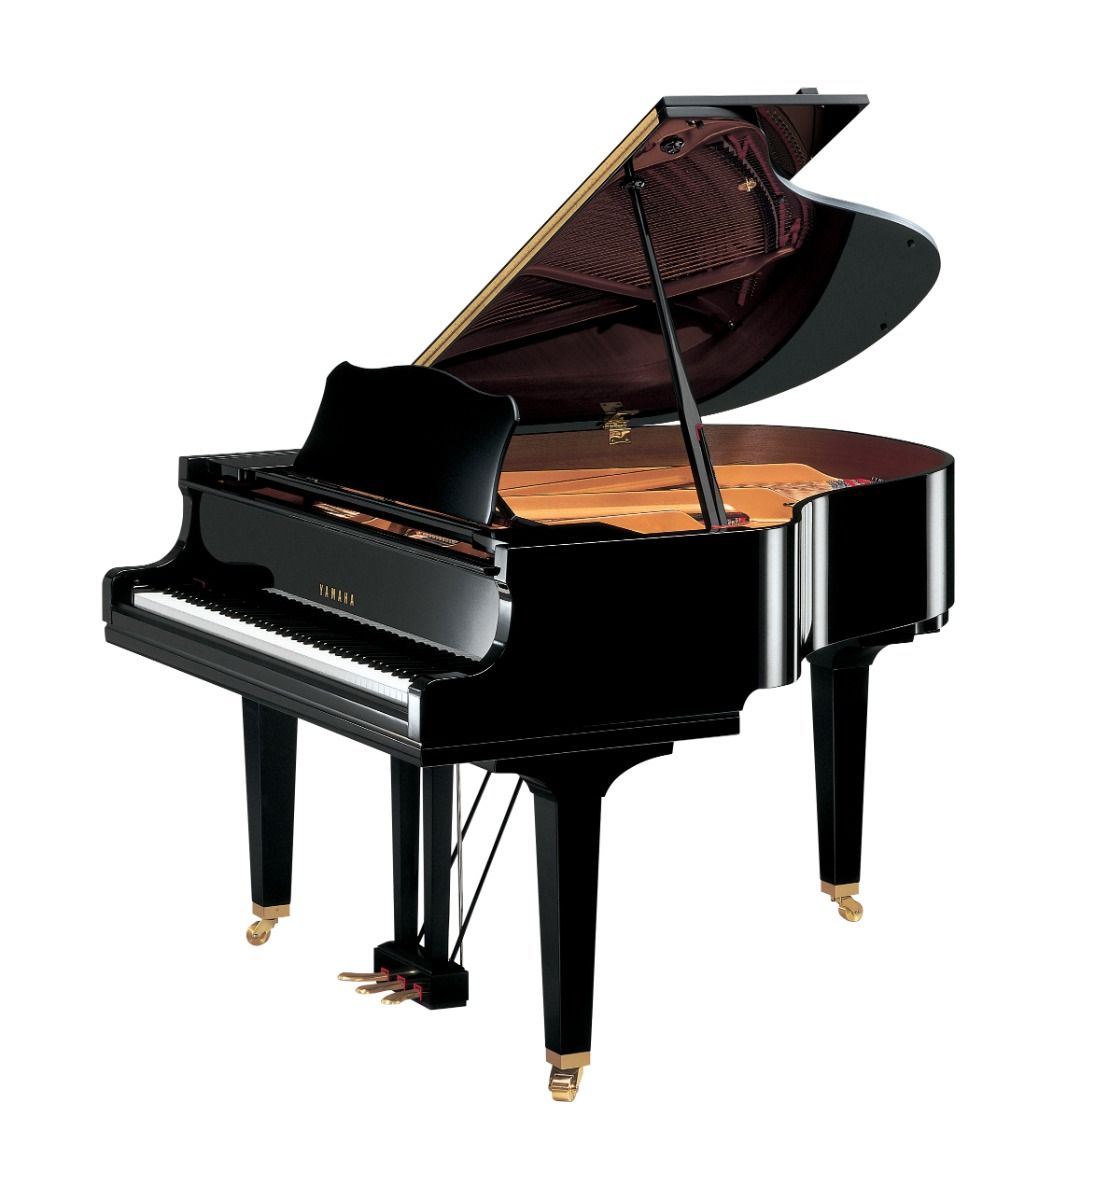 Piano Of The Week: Yamaha GC1 5’3″ Grand Piano